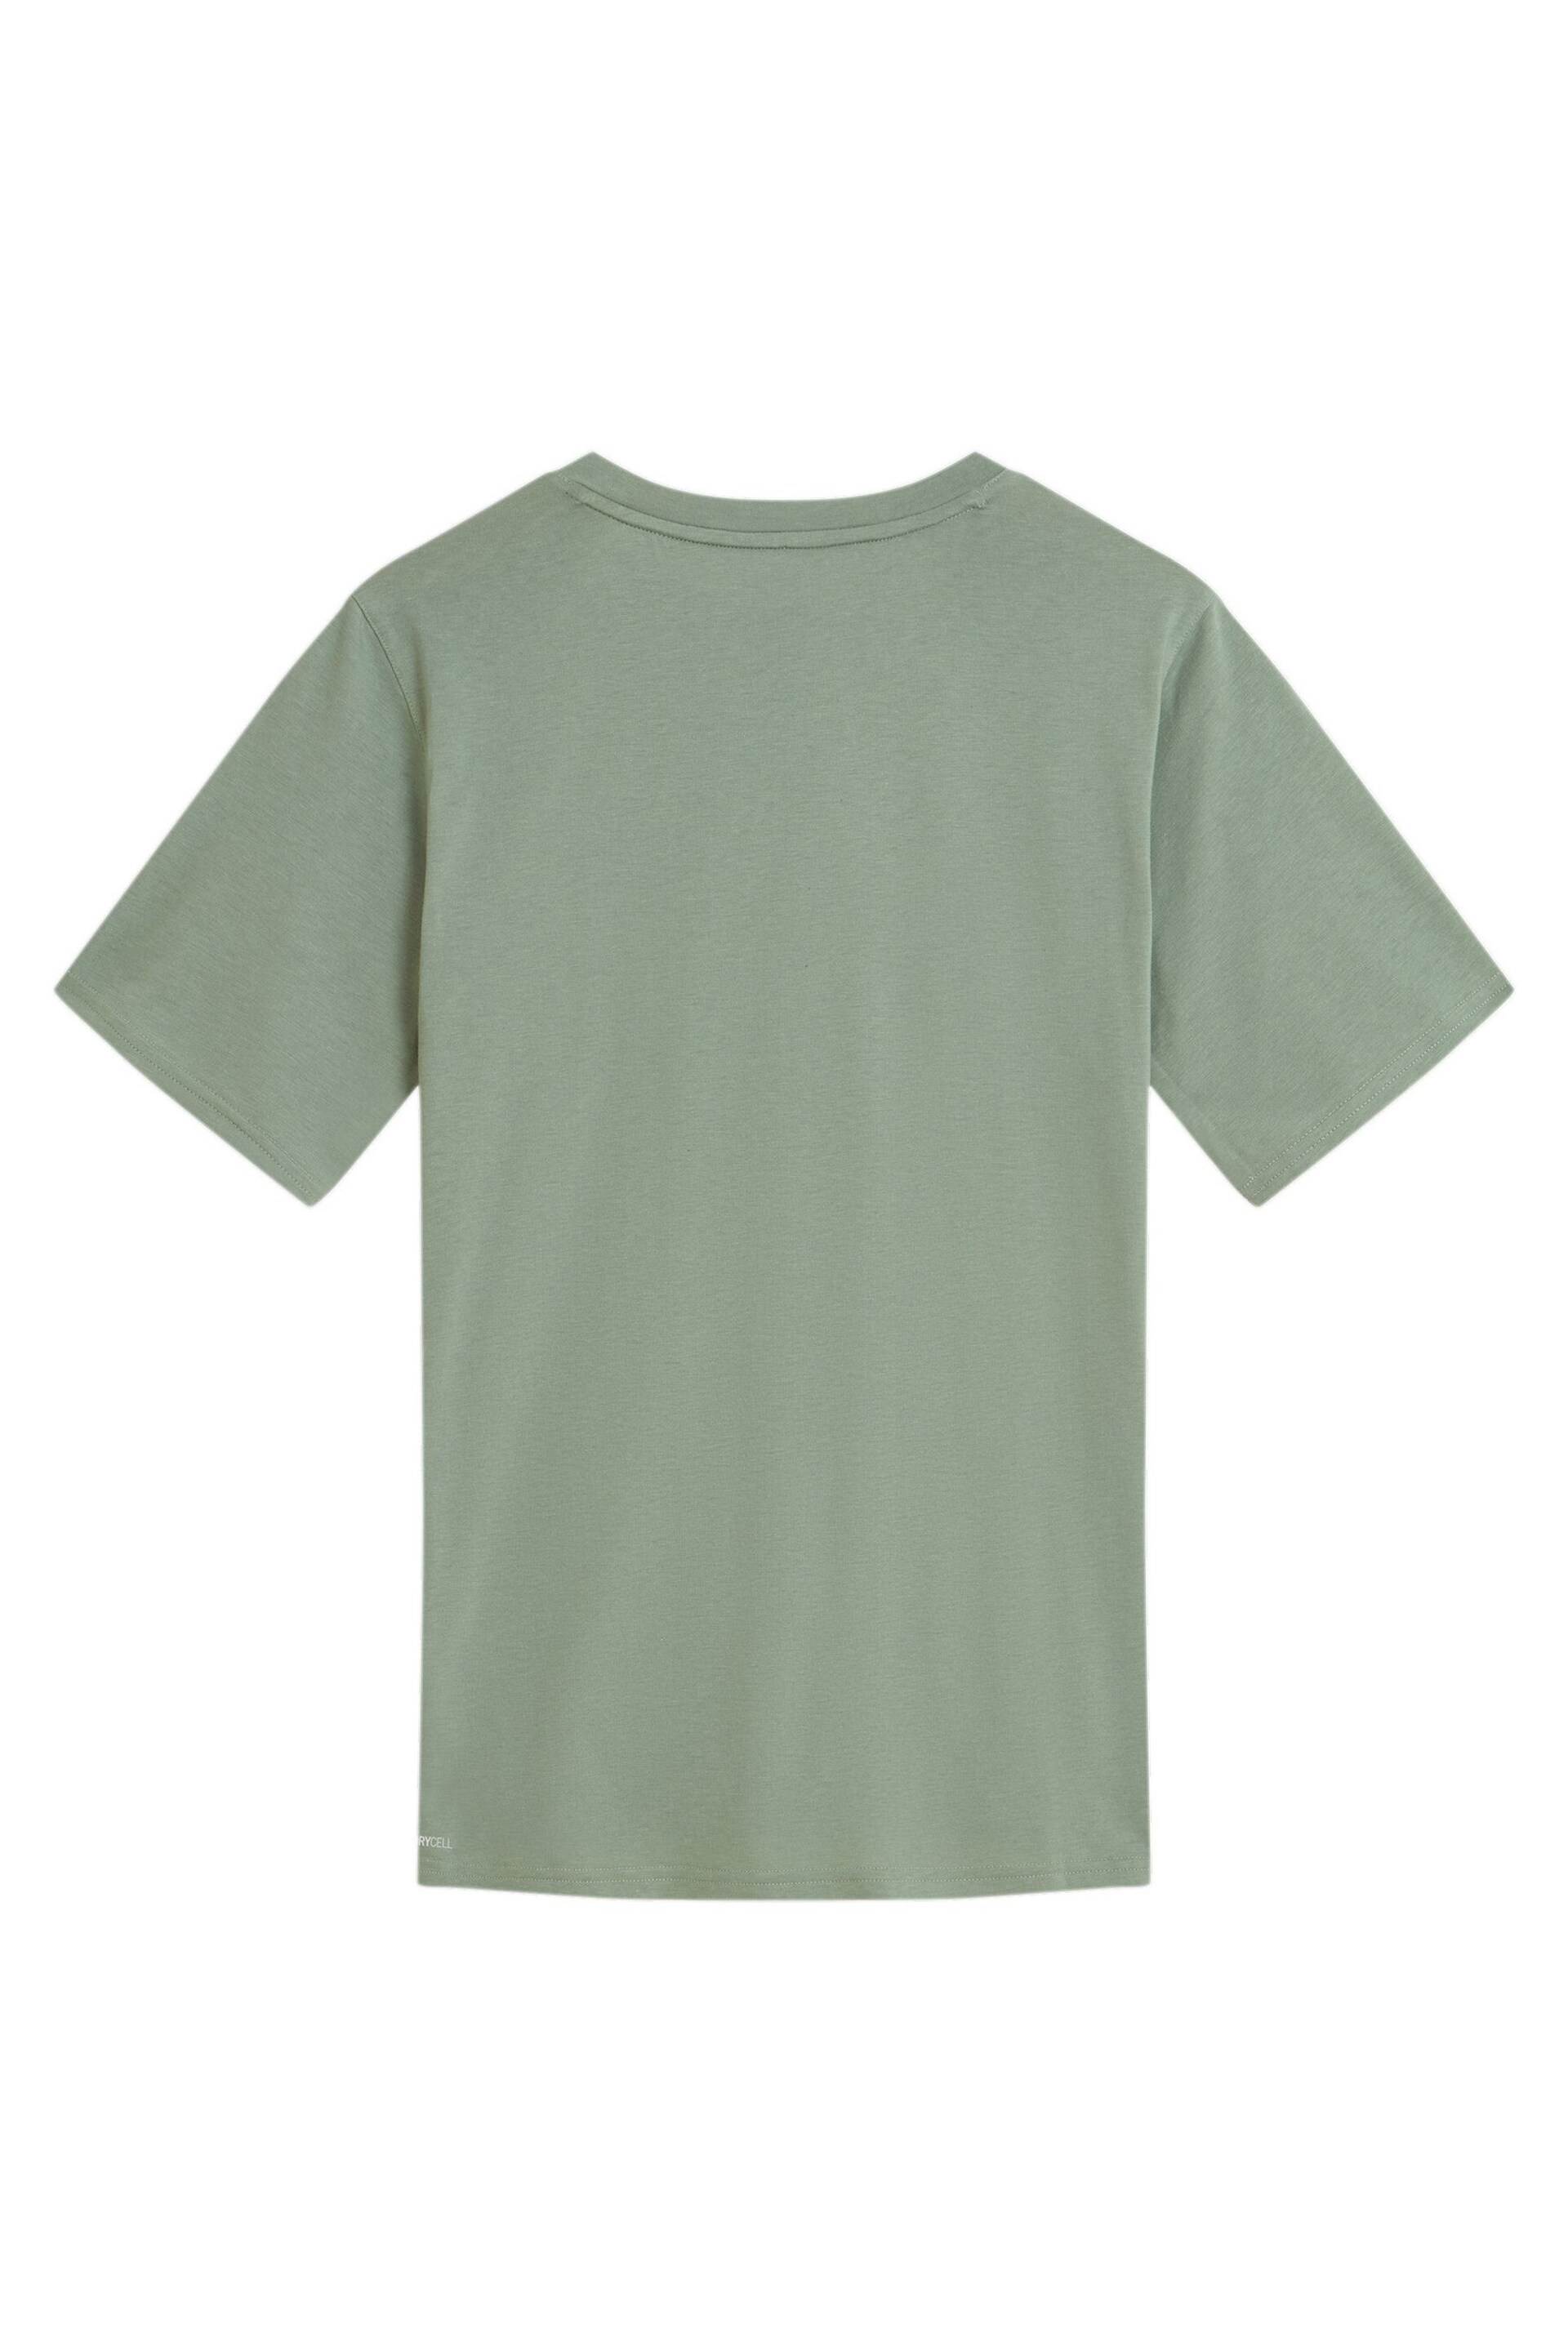 Puma Green EVOLVE Mens Training T-Shirt - Image 2 of 2